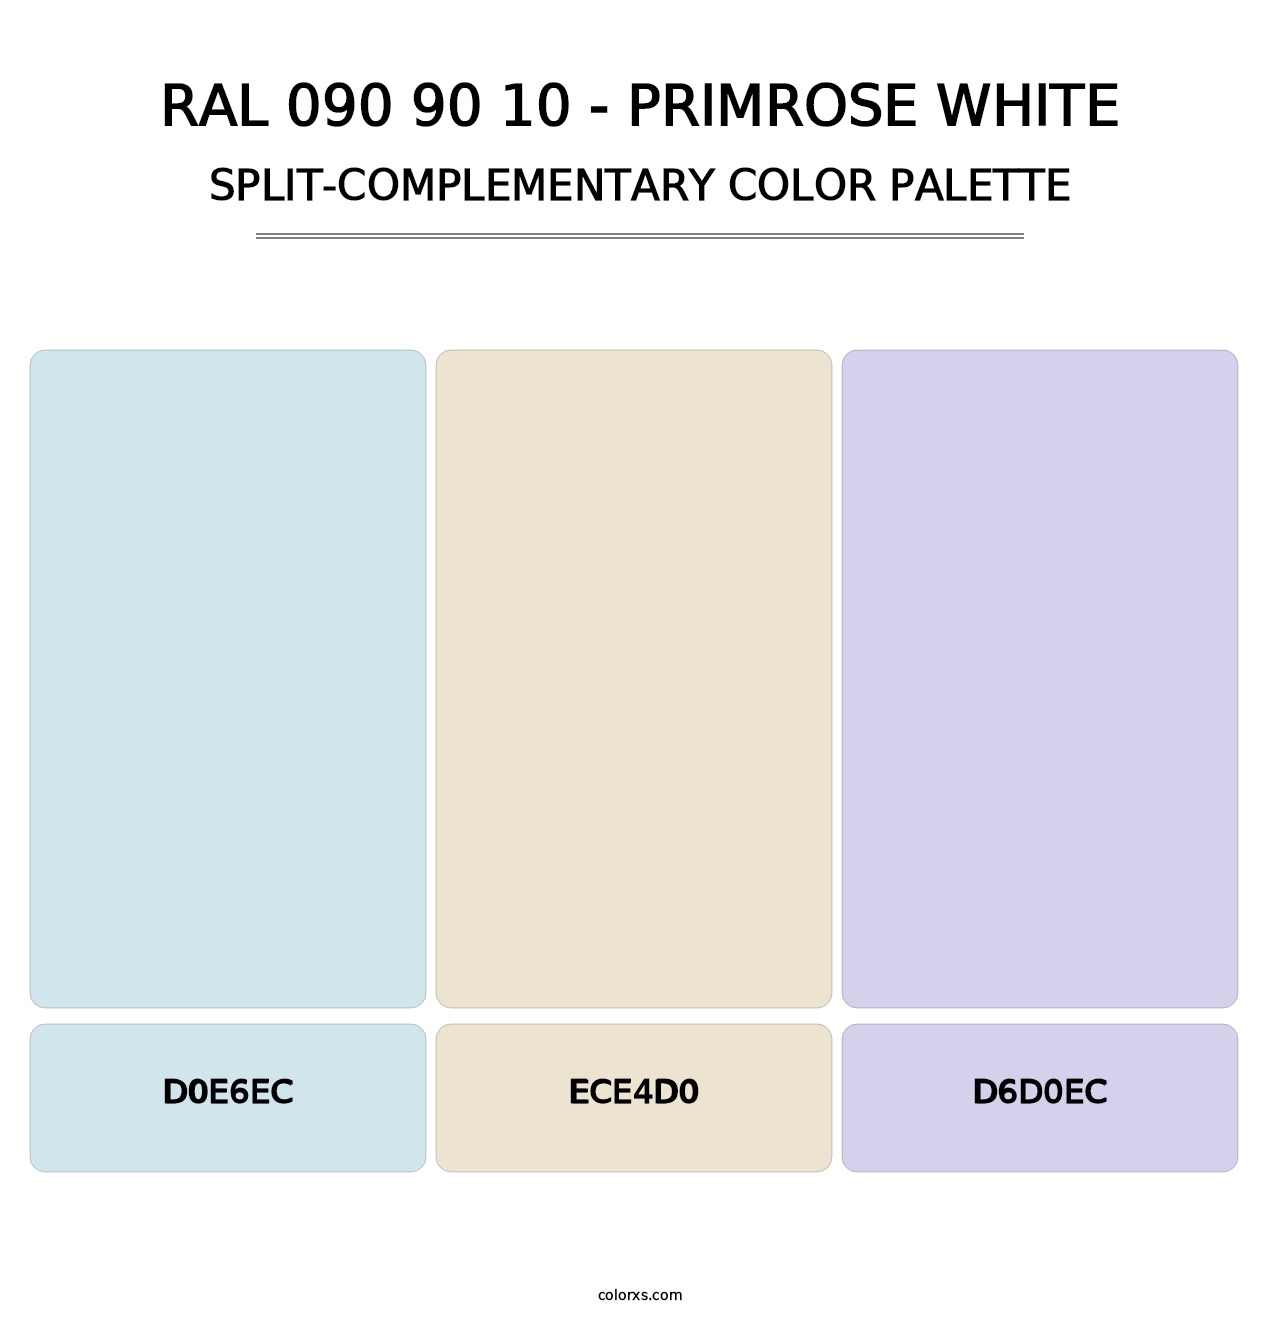 RAL 090 90 10 - Primrose White - Split-Complementary Color Palette